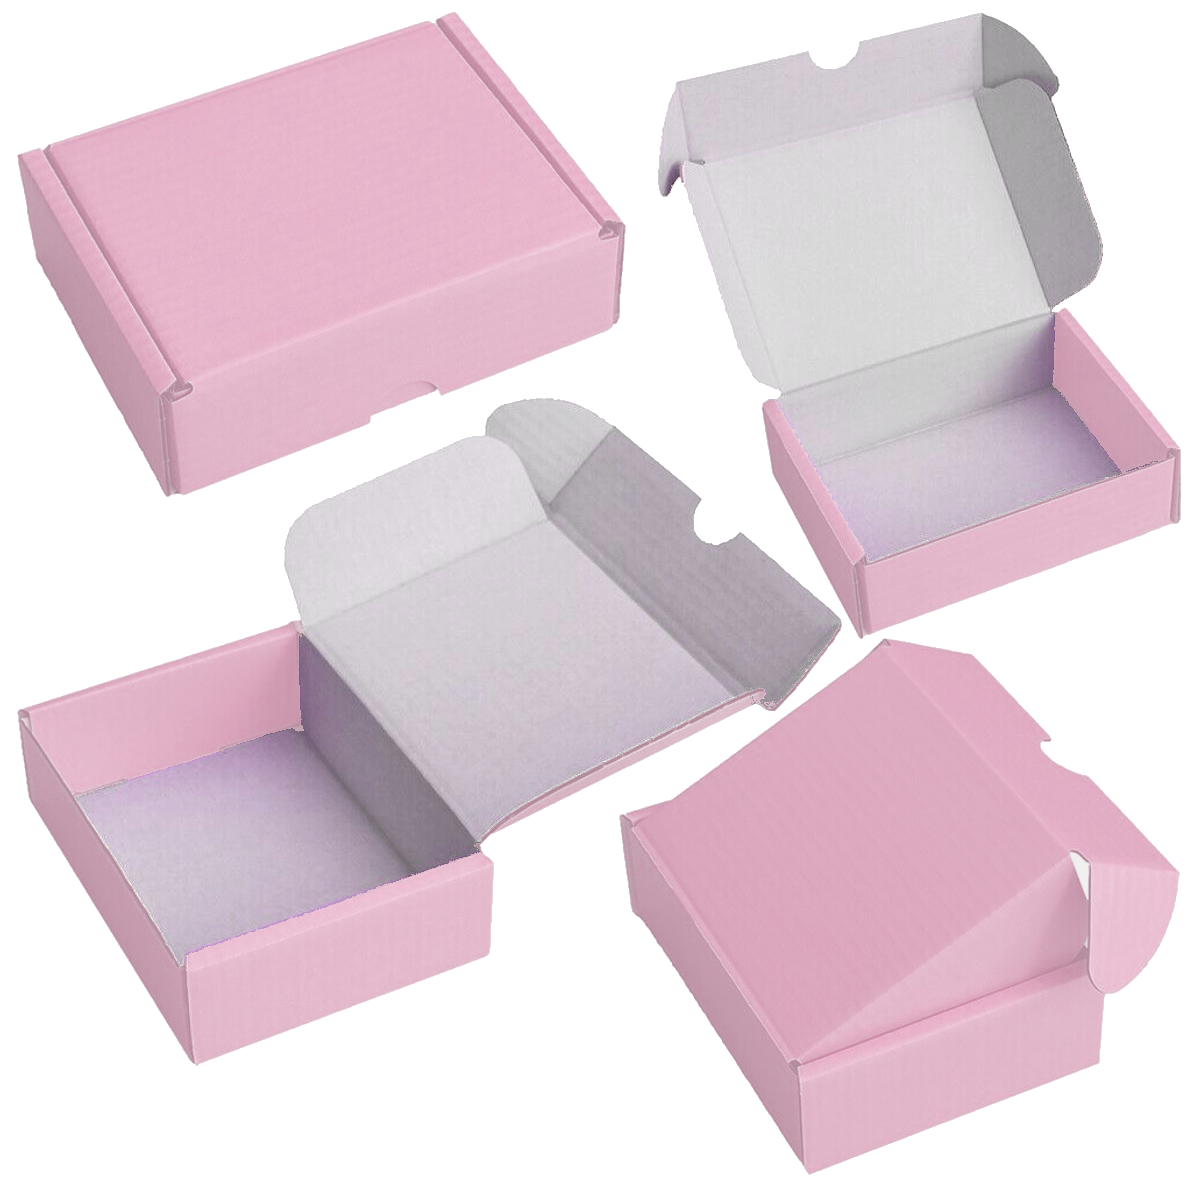 F2 Pink 5 x 4 x 3 inch Postal Boxes